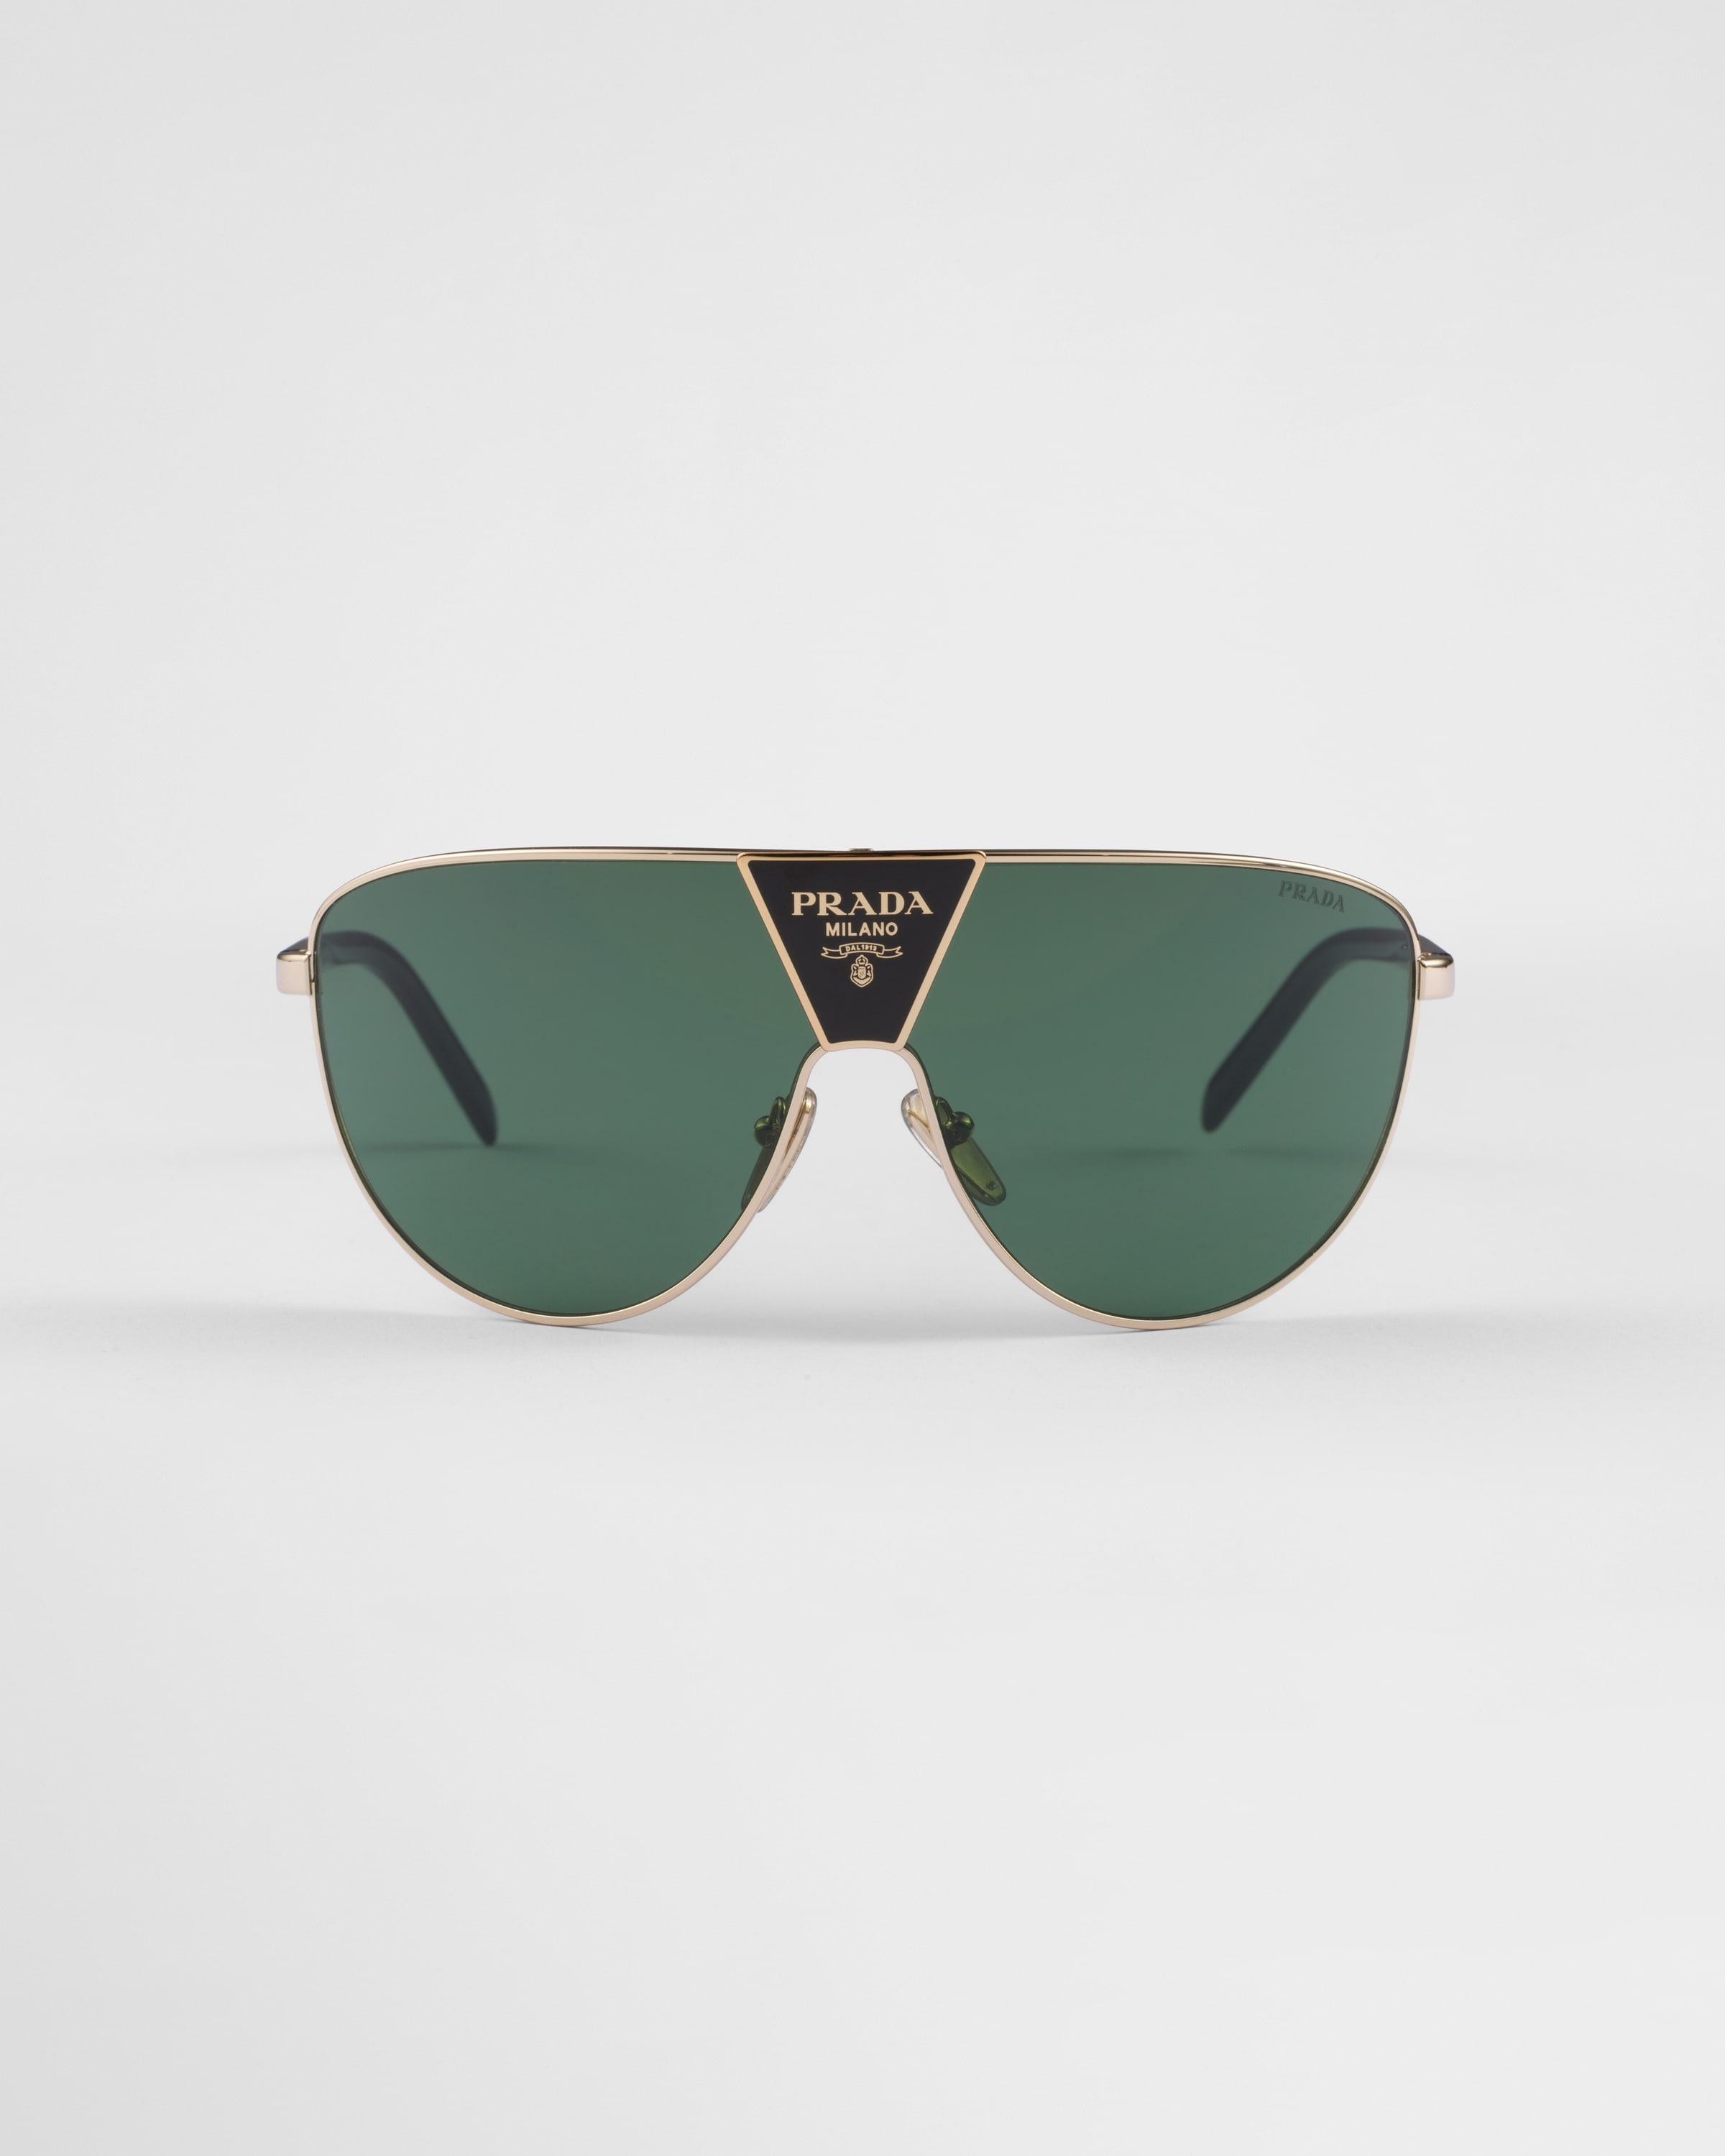 Prada Runway sunglasses - 1